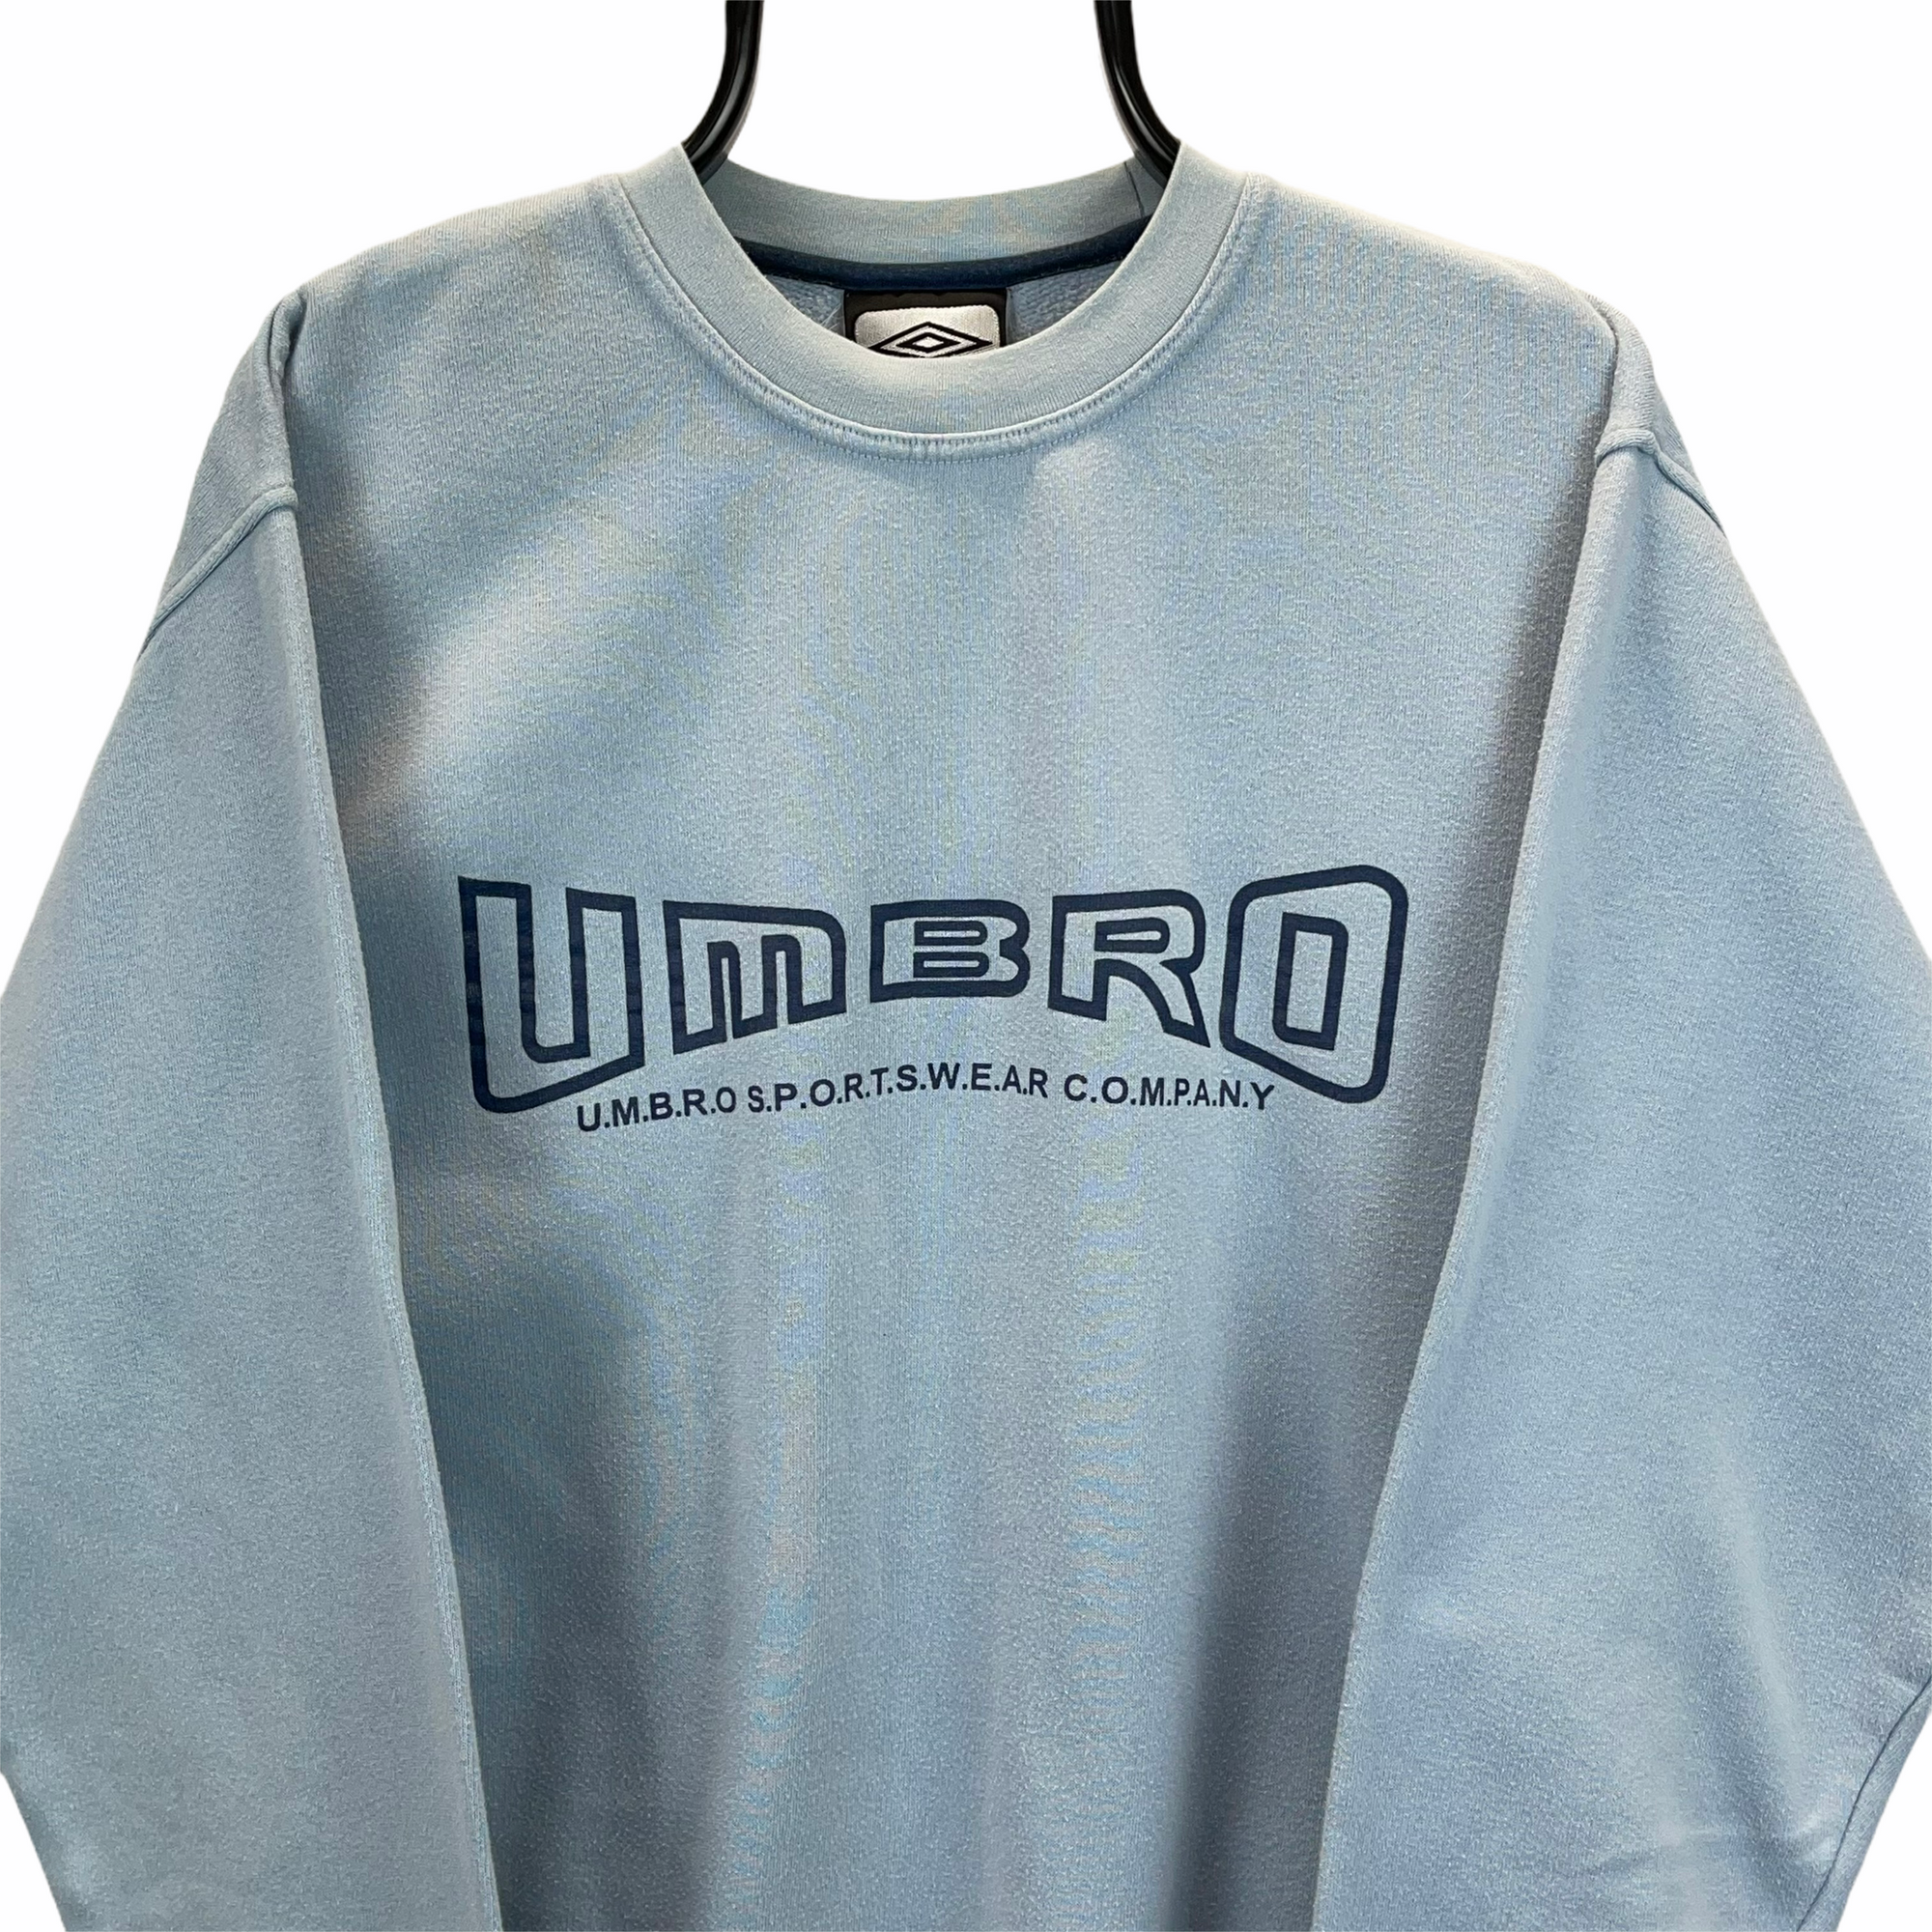 Vintage Umbro Spellout Sweatshirt in Duck Egg Blue - Men's Large/Women's XL